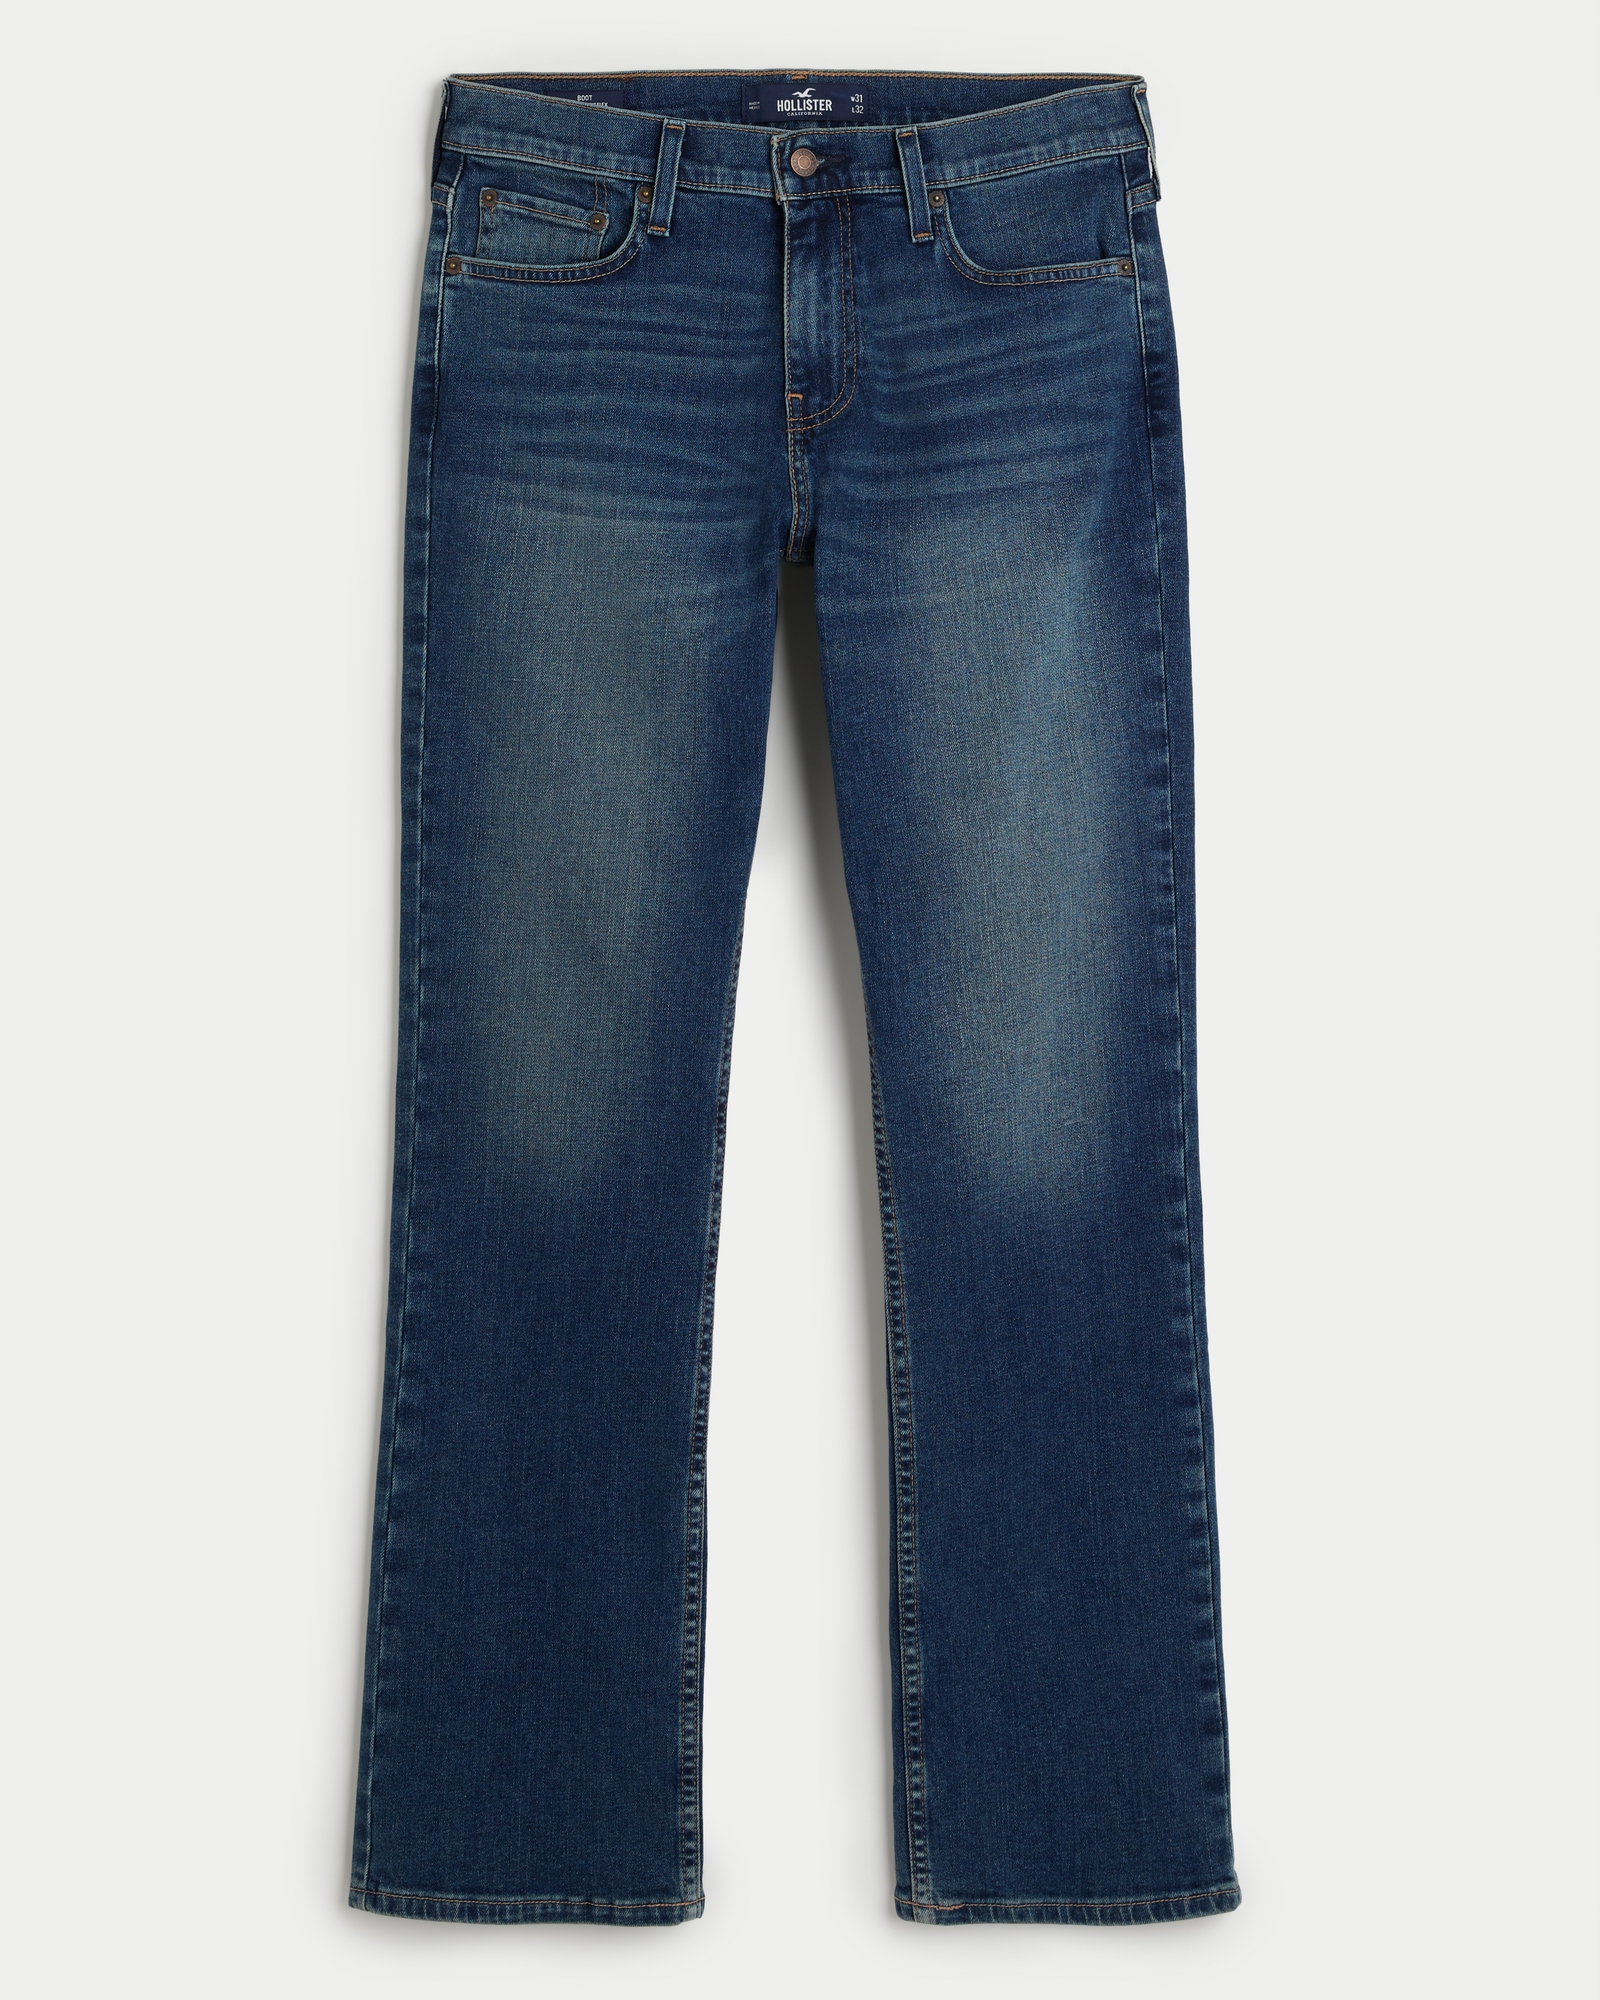 Buy the Men's Hollister Straight Leg Jeans Sz 30x32